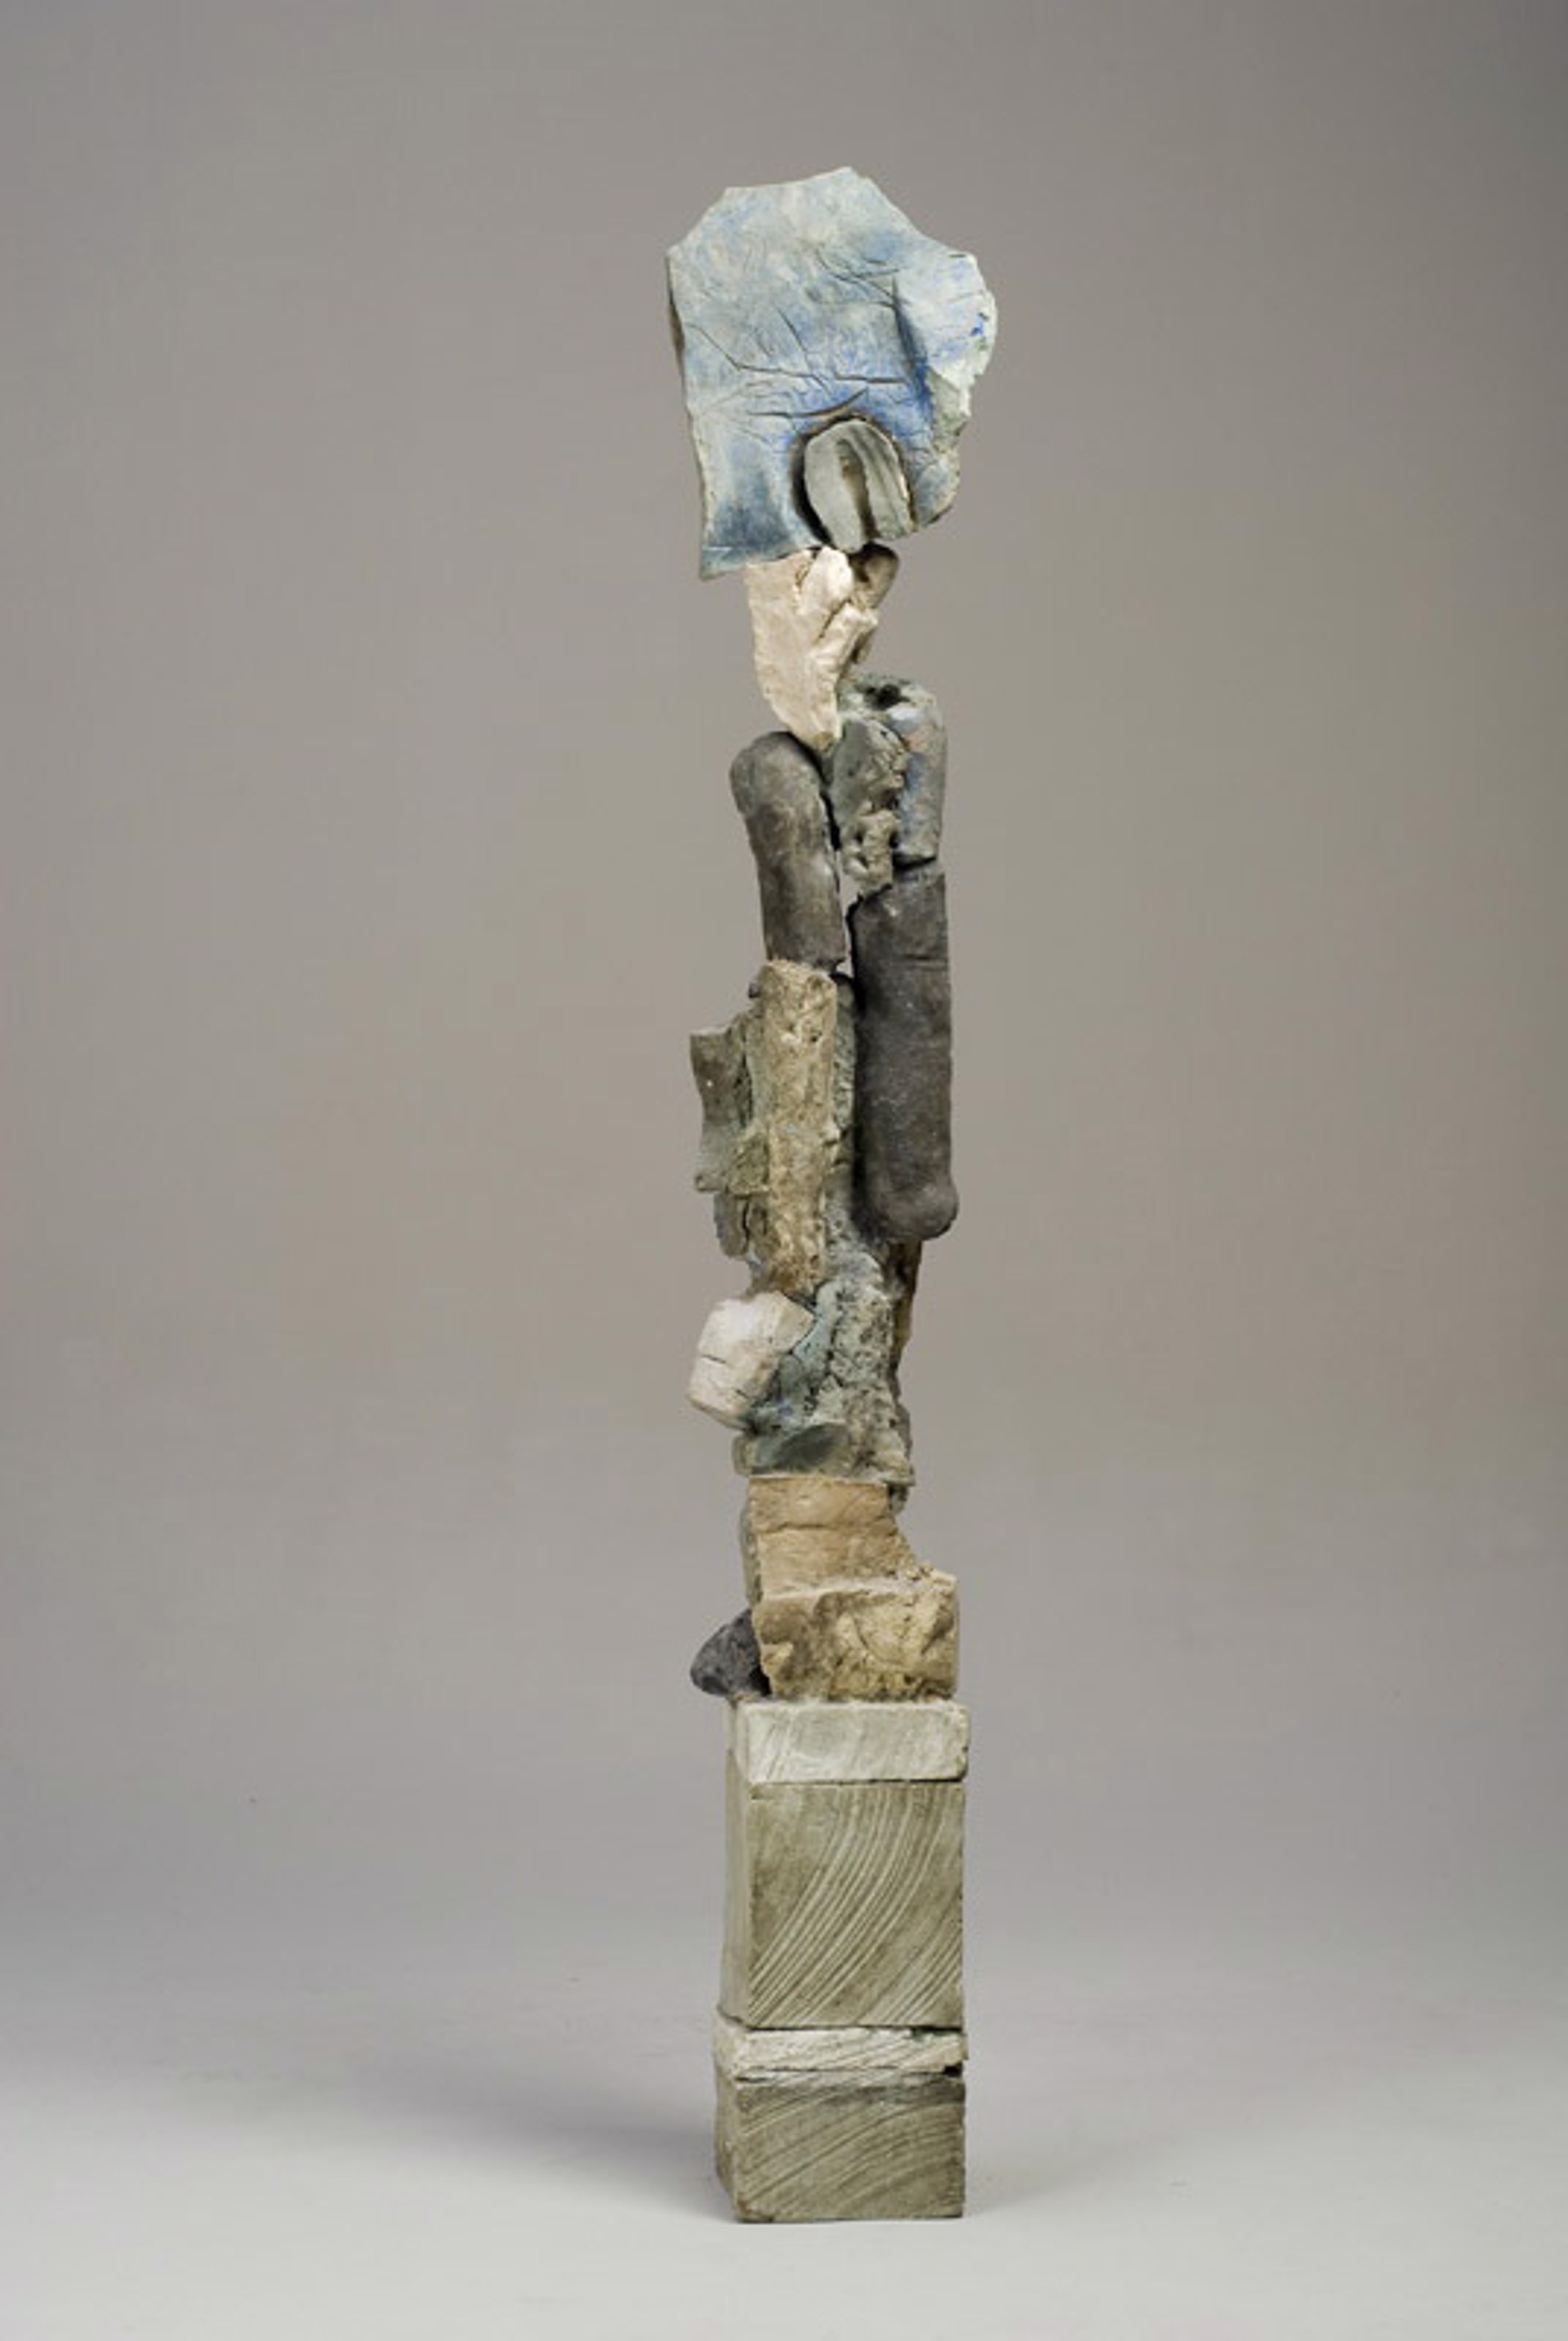 Segmented Figure with Aura by Stephen De Staebler